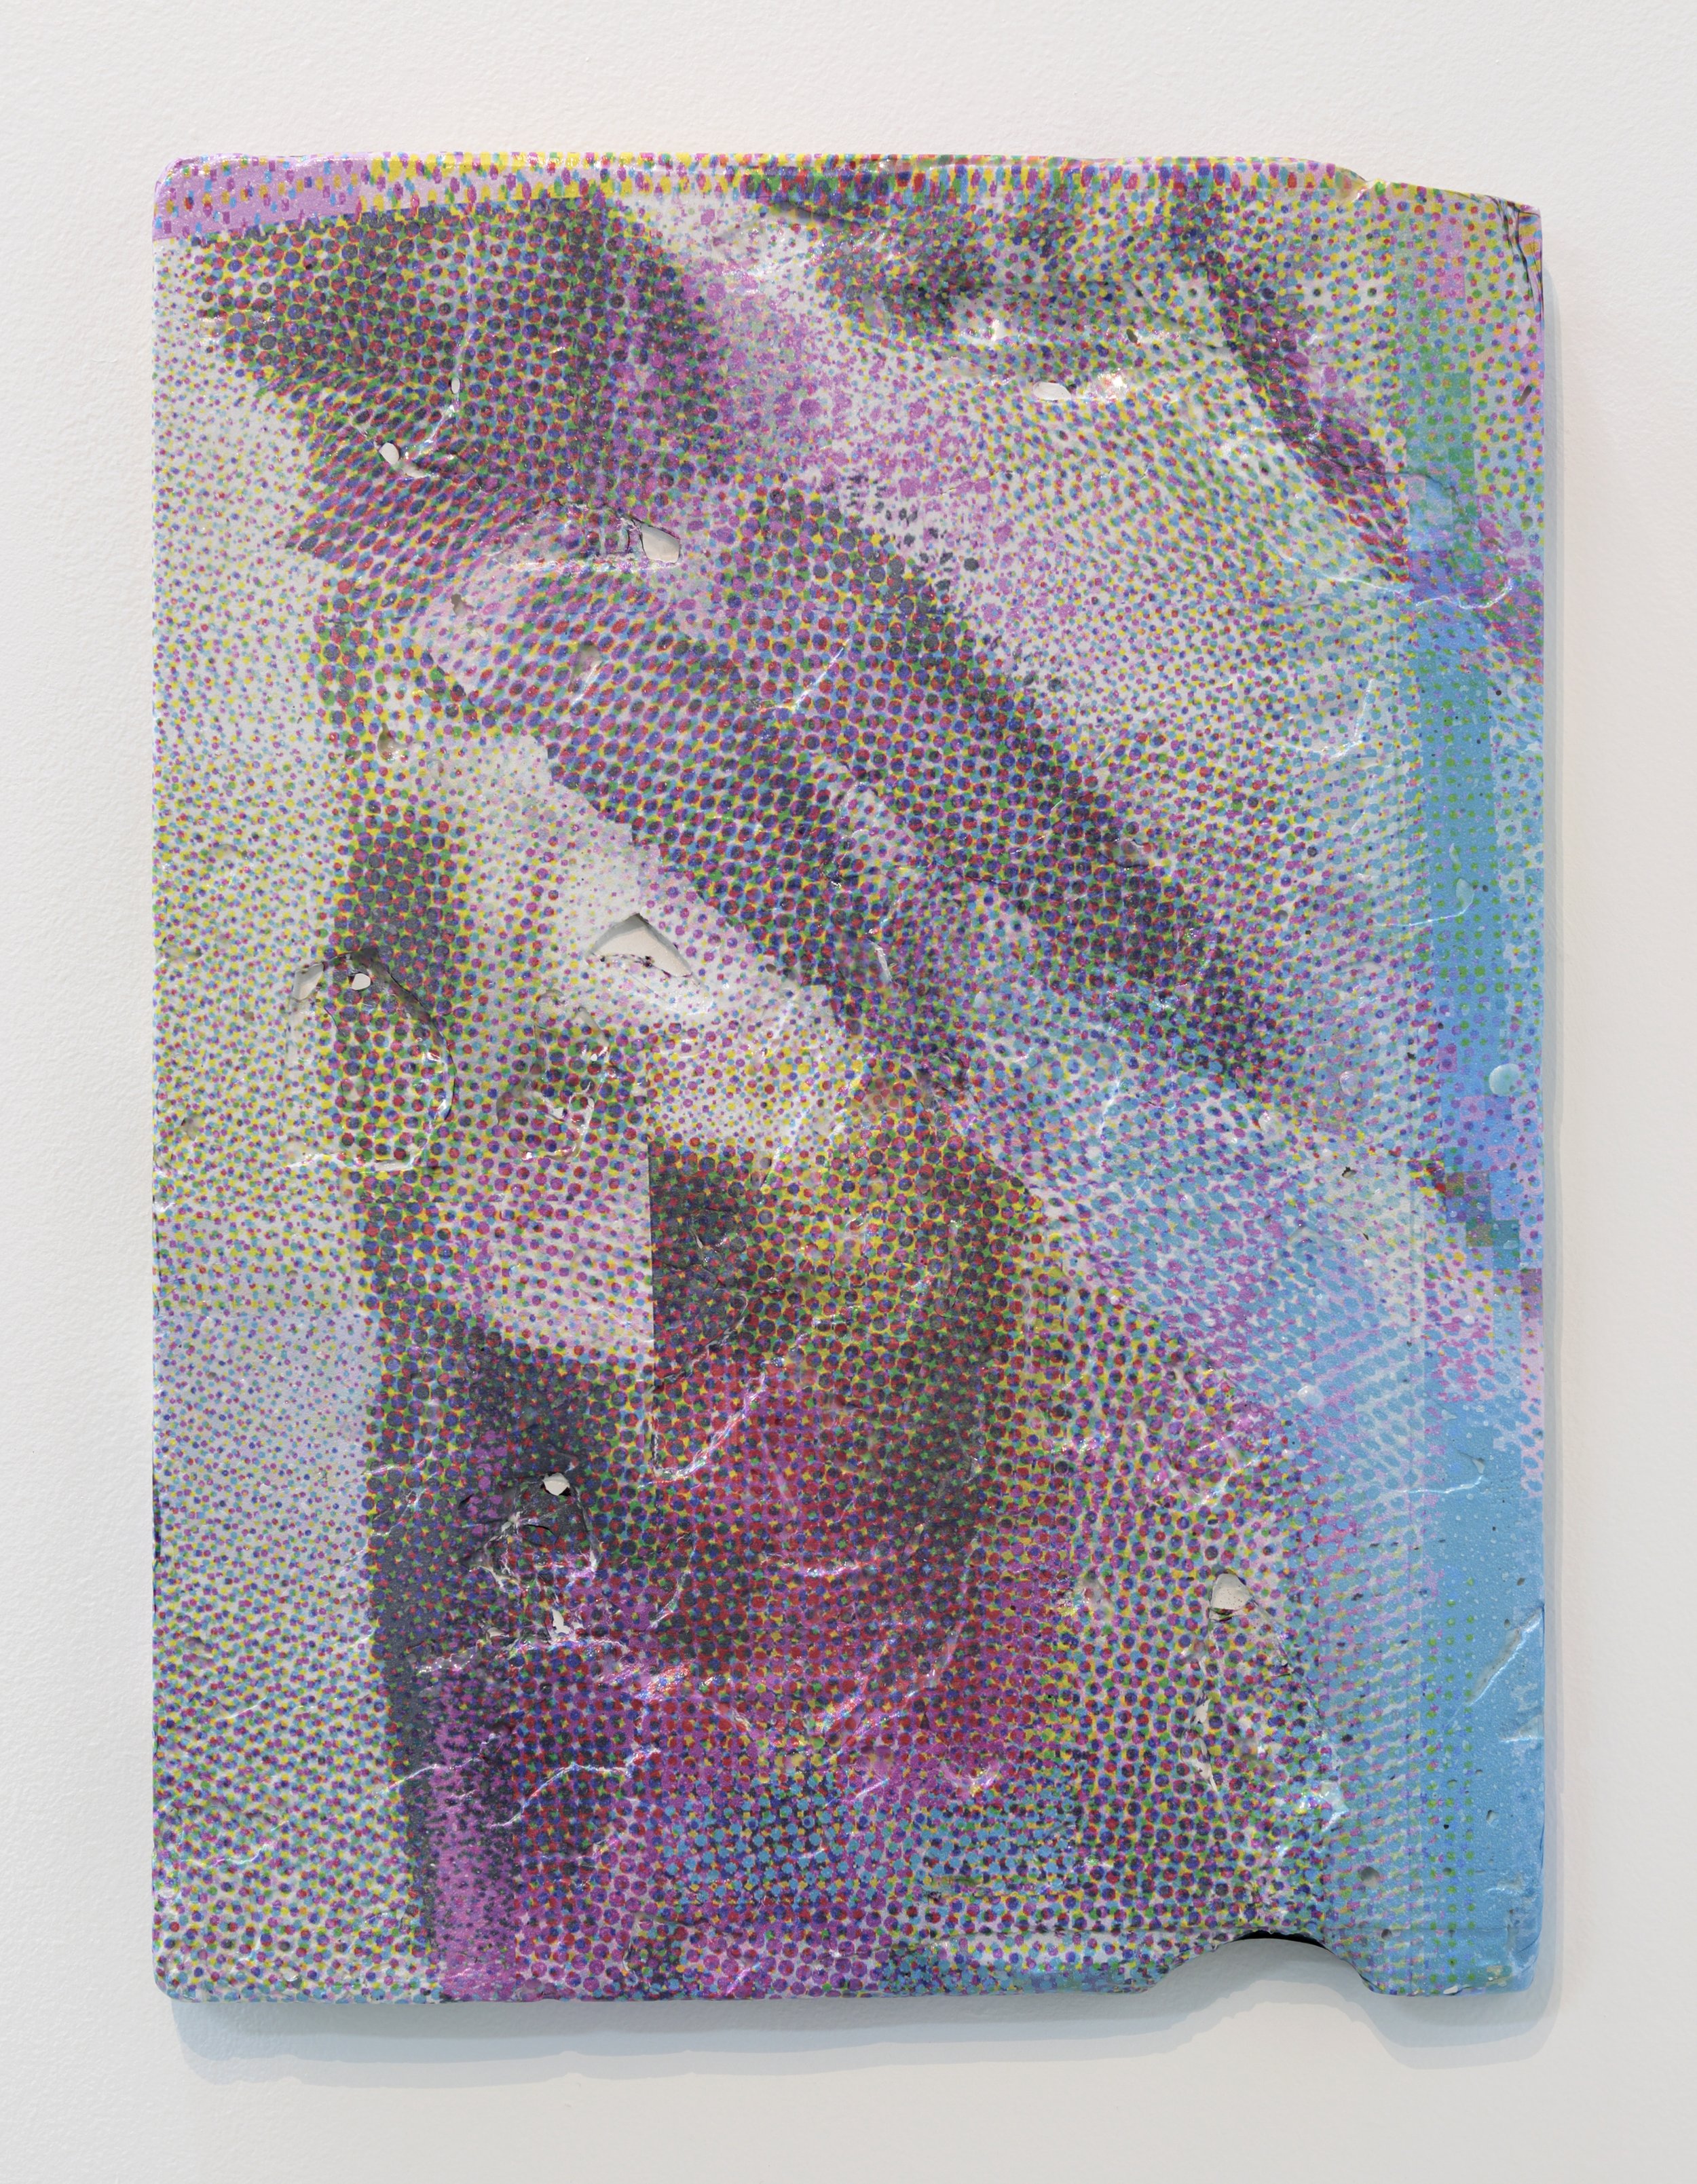   Cygnus (v2)   Plaster, mesh, water transfer print  40cm x 30cm   